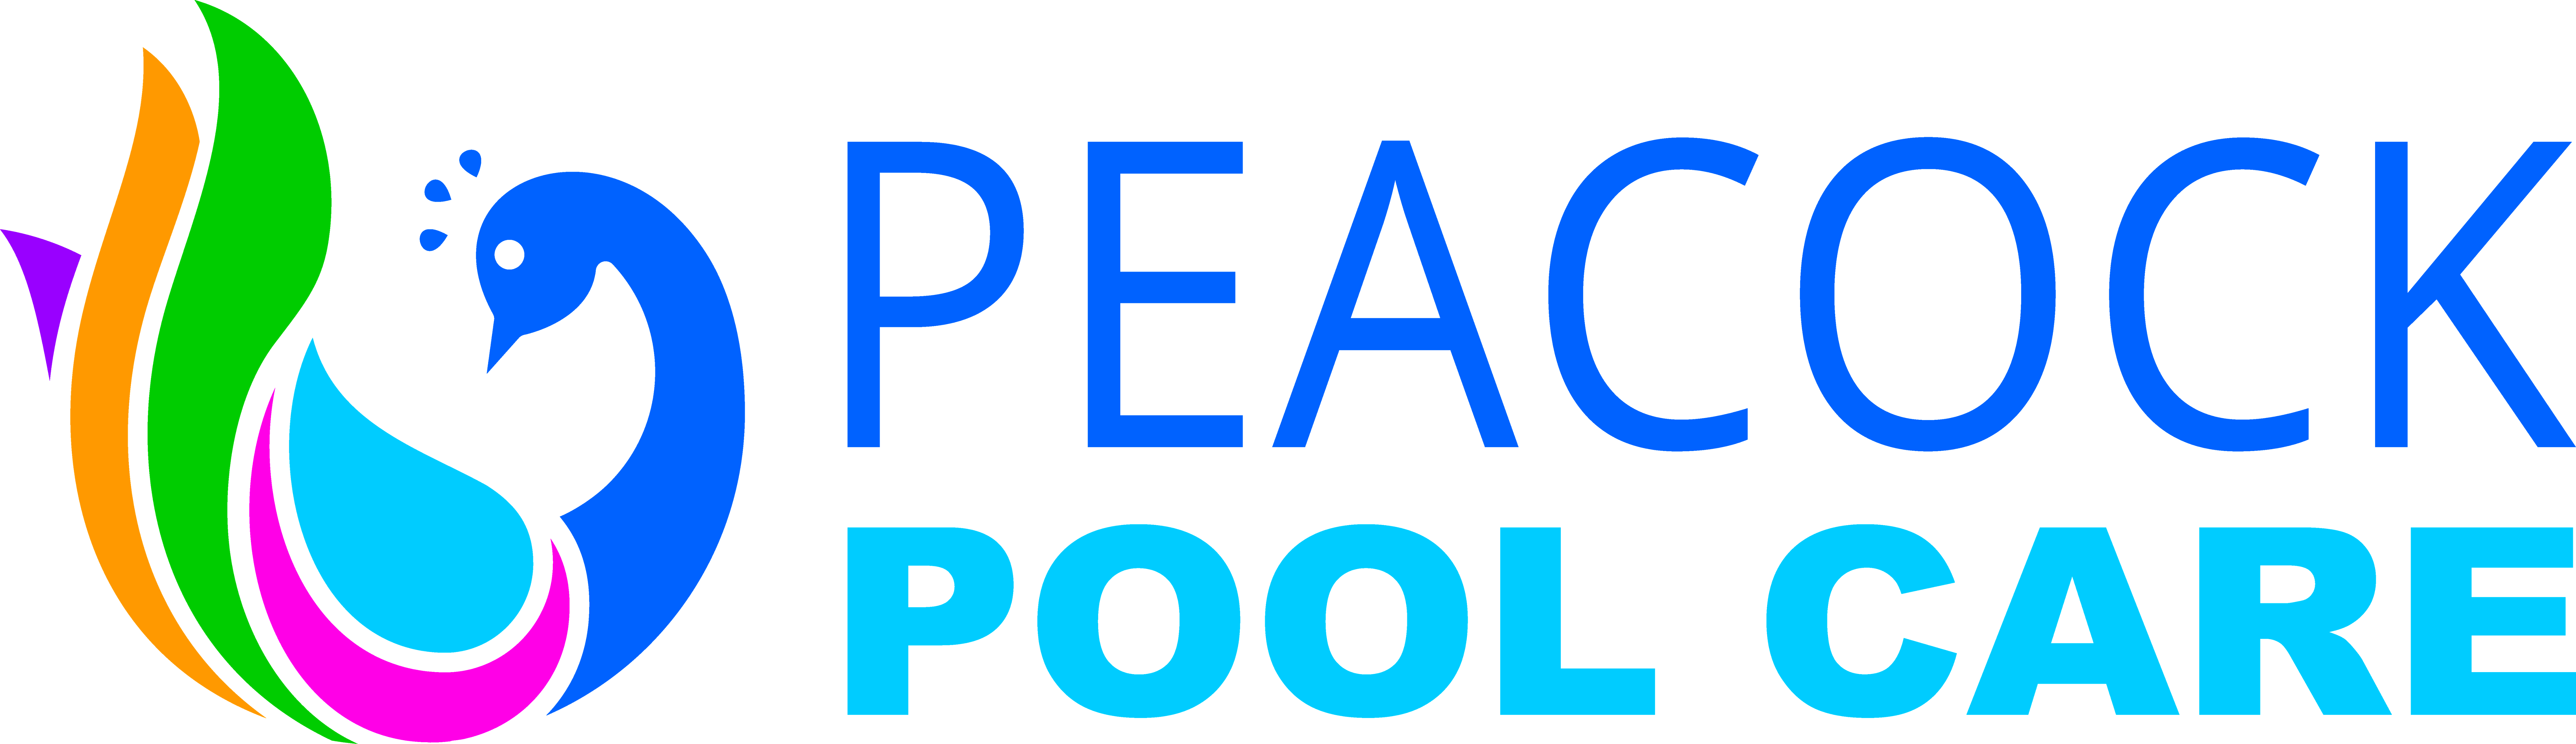 Peacock Pool Service